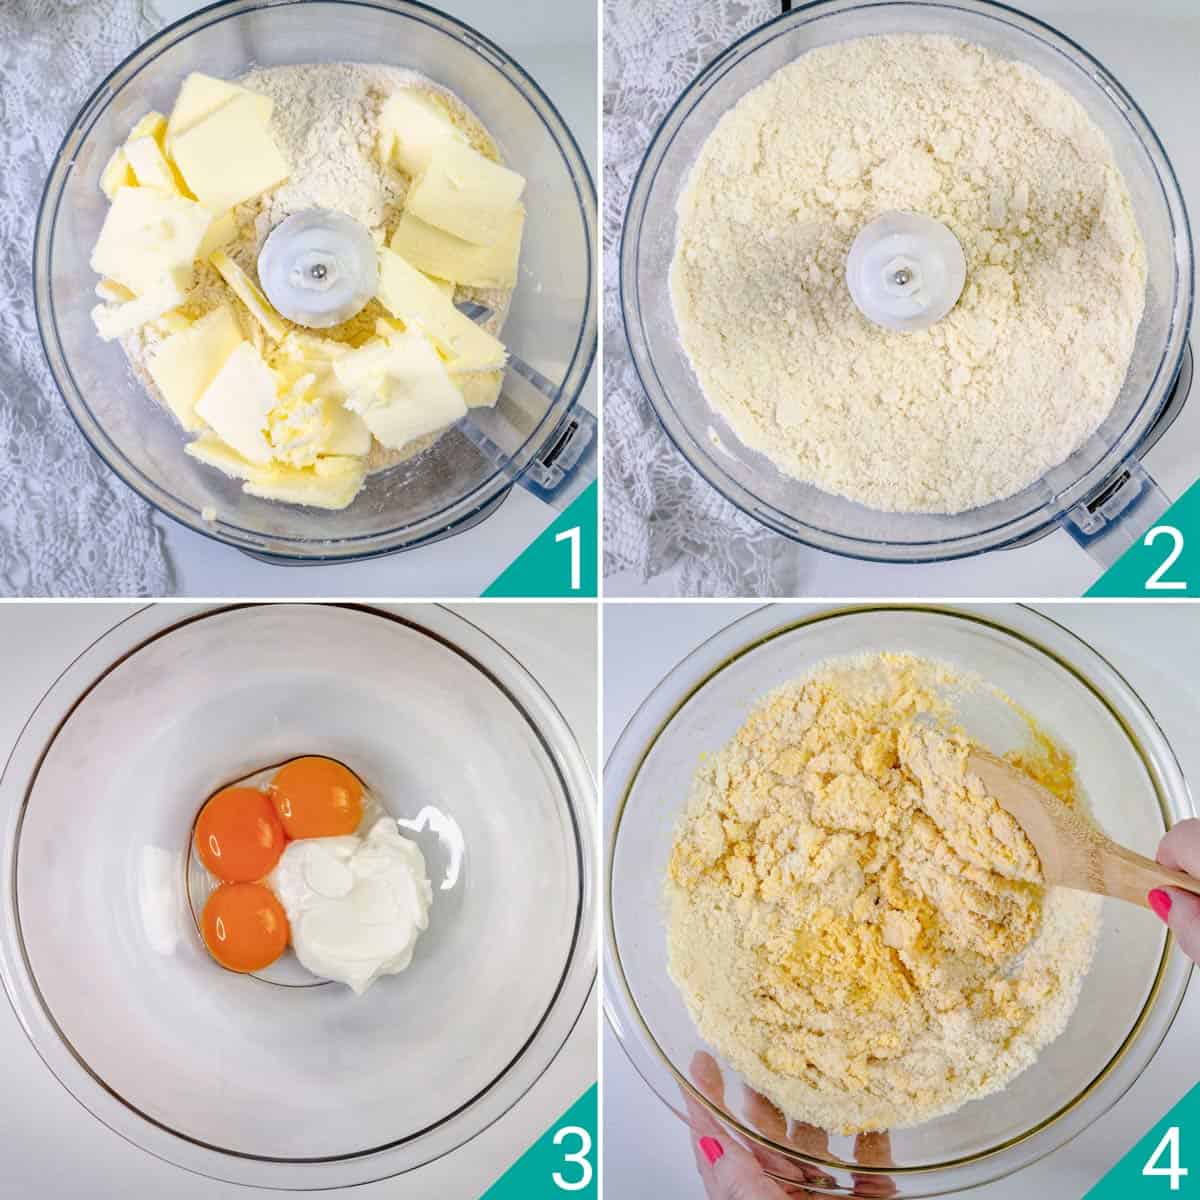 Four steps to making the kifli dough. 